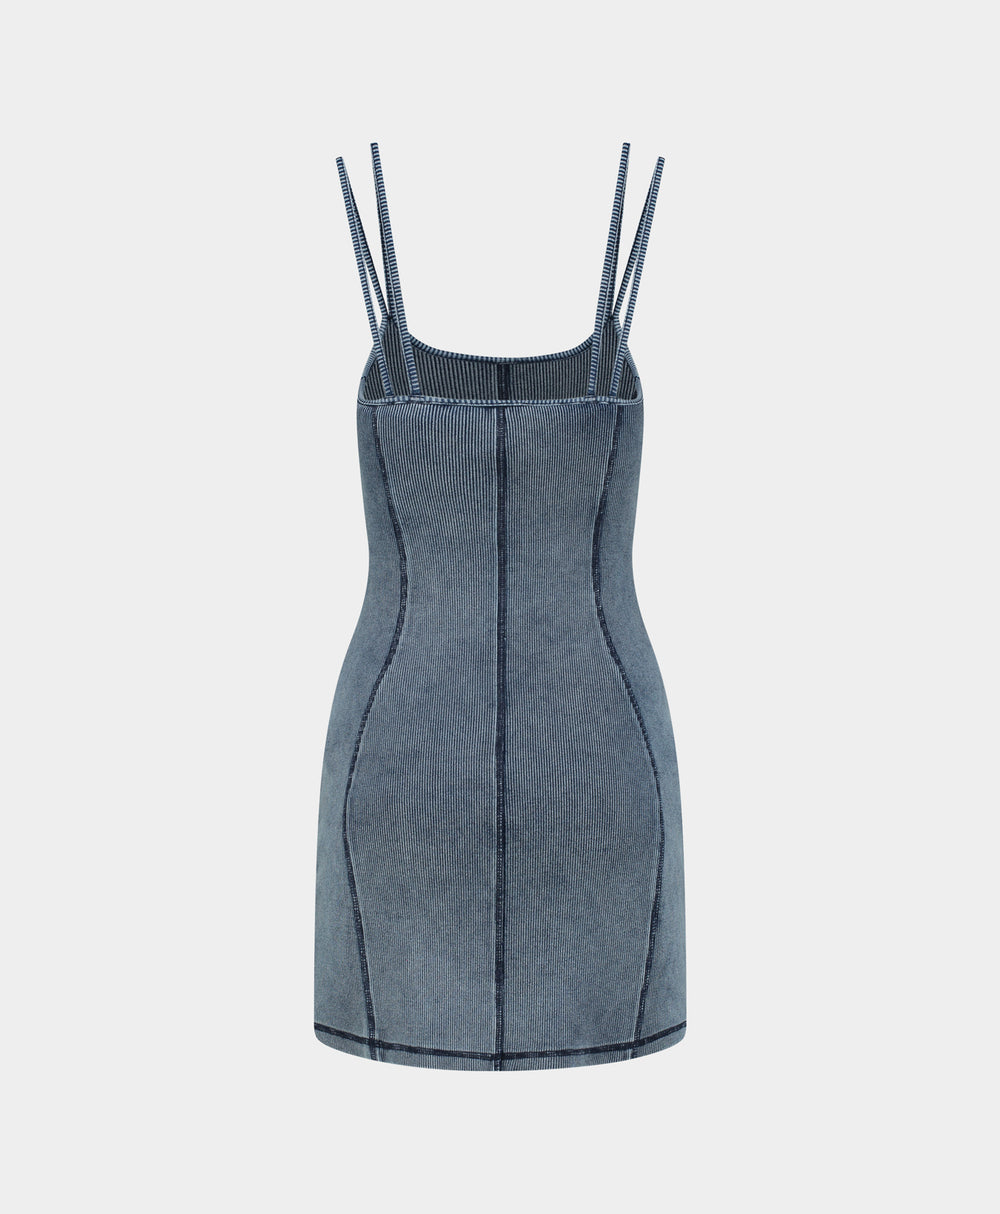 DP - Blue Nalia Dress - Packshot - Rear